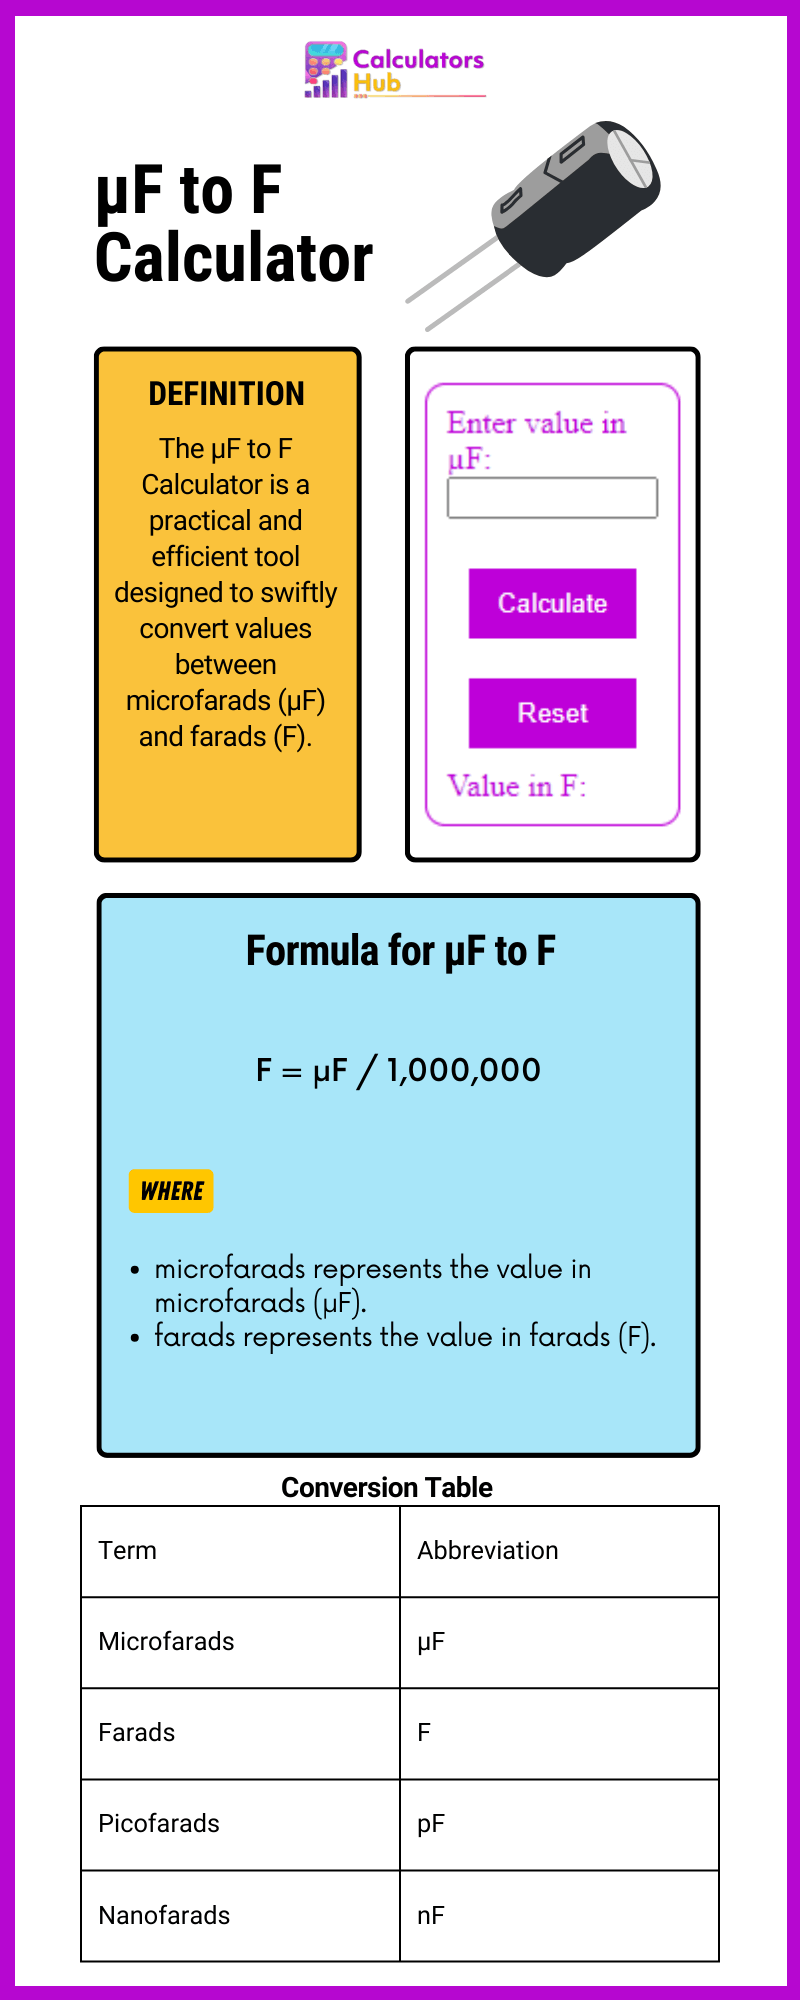 µF to F Calculator